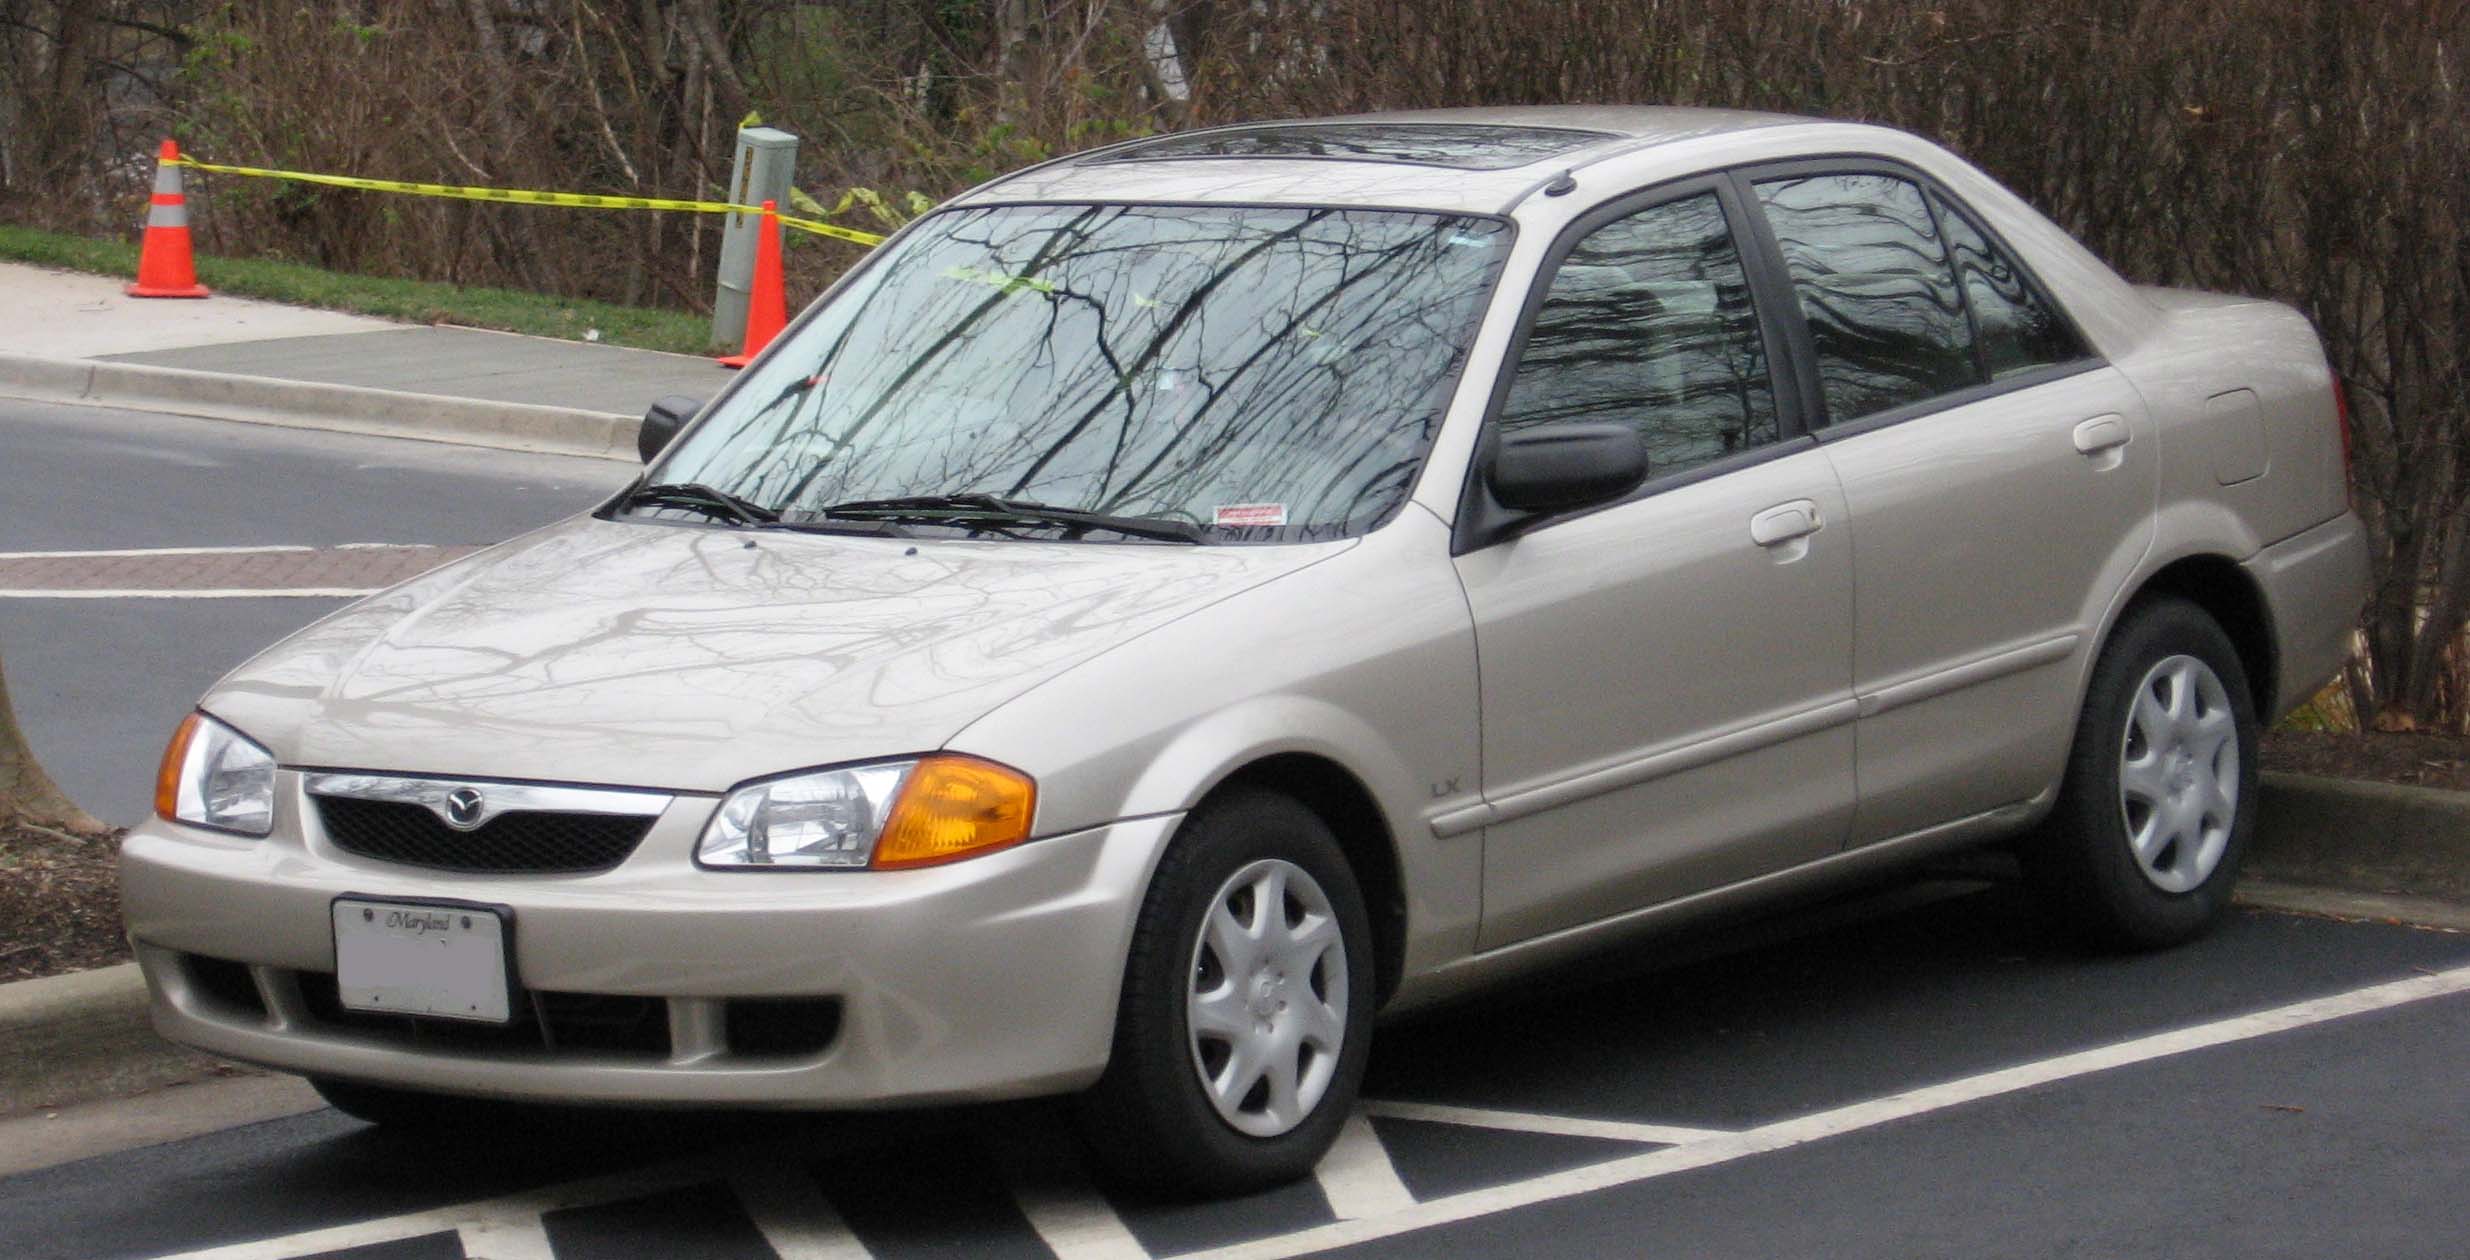 Dossier: 99-00 Mazda Protege.jpg - Wikimedia Commons